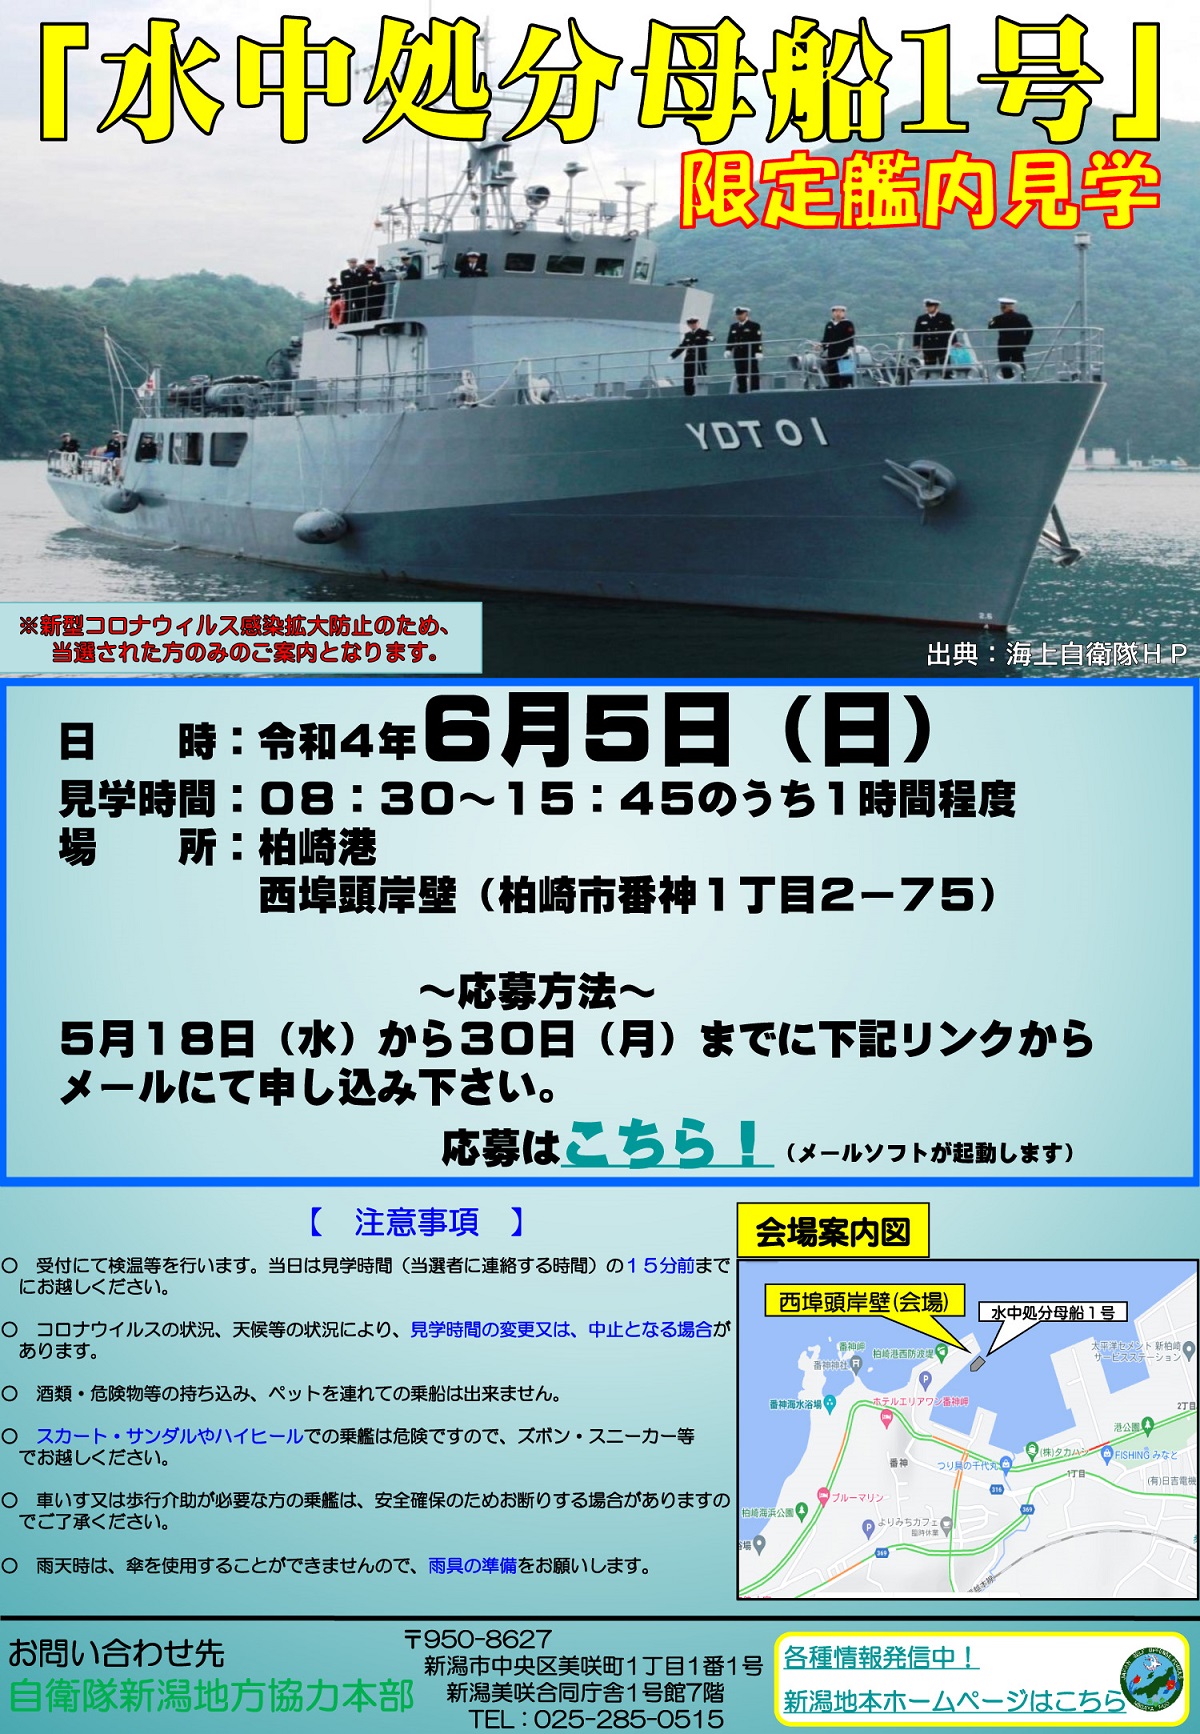 水中処分母船1号(YDT-01)限定艦内見学ポスター